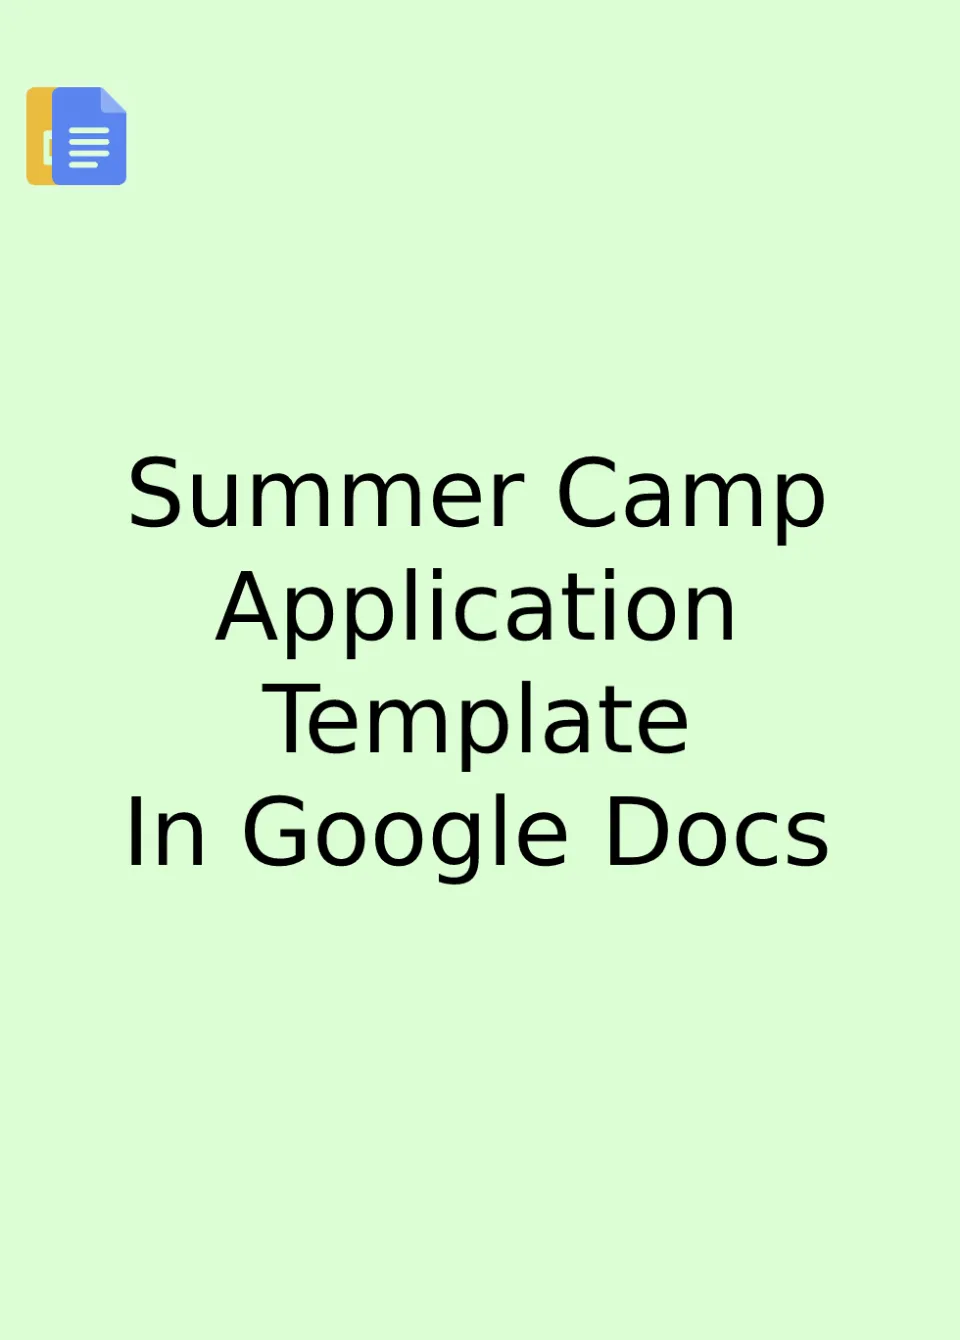 Summer Camp Application Template Google Docs